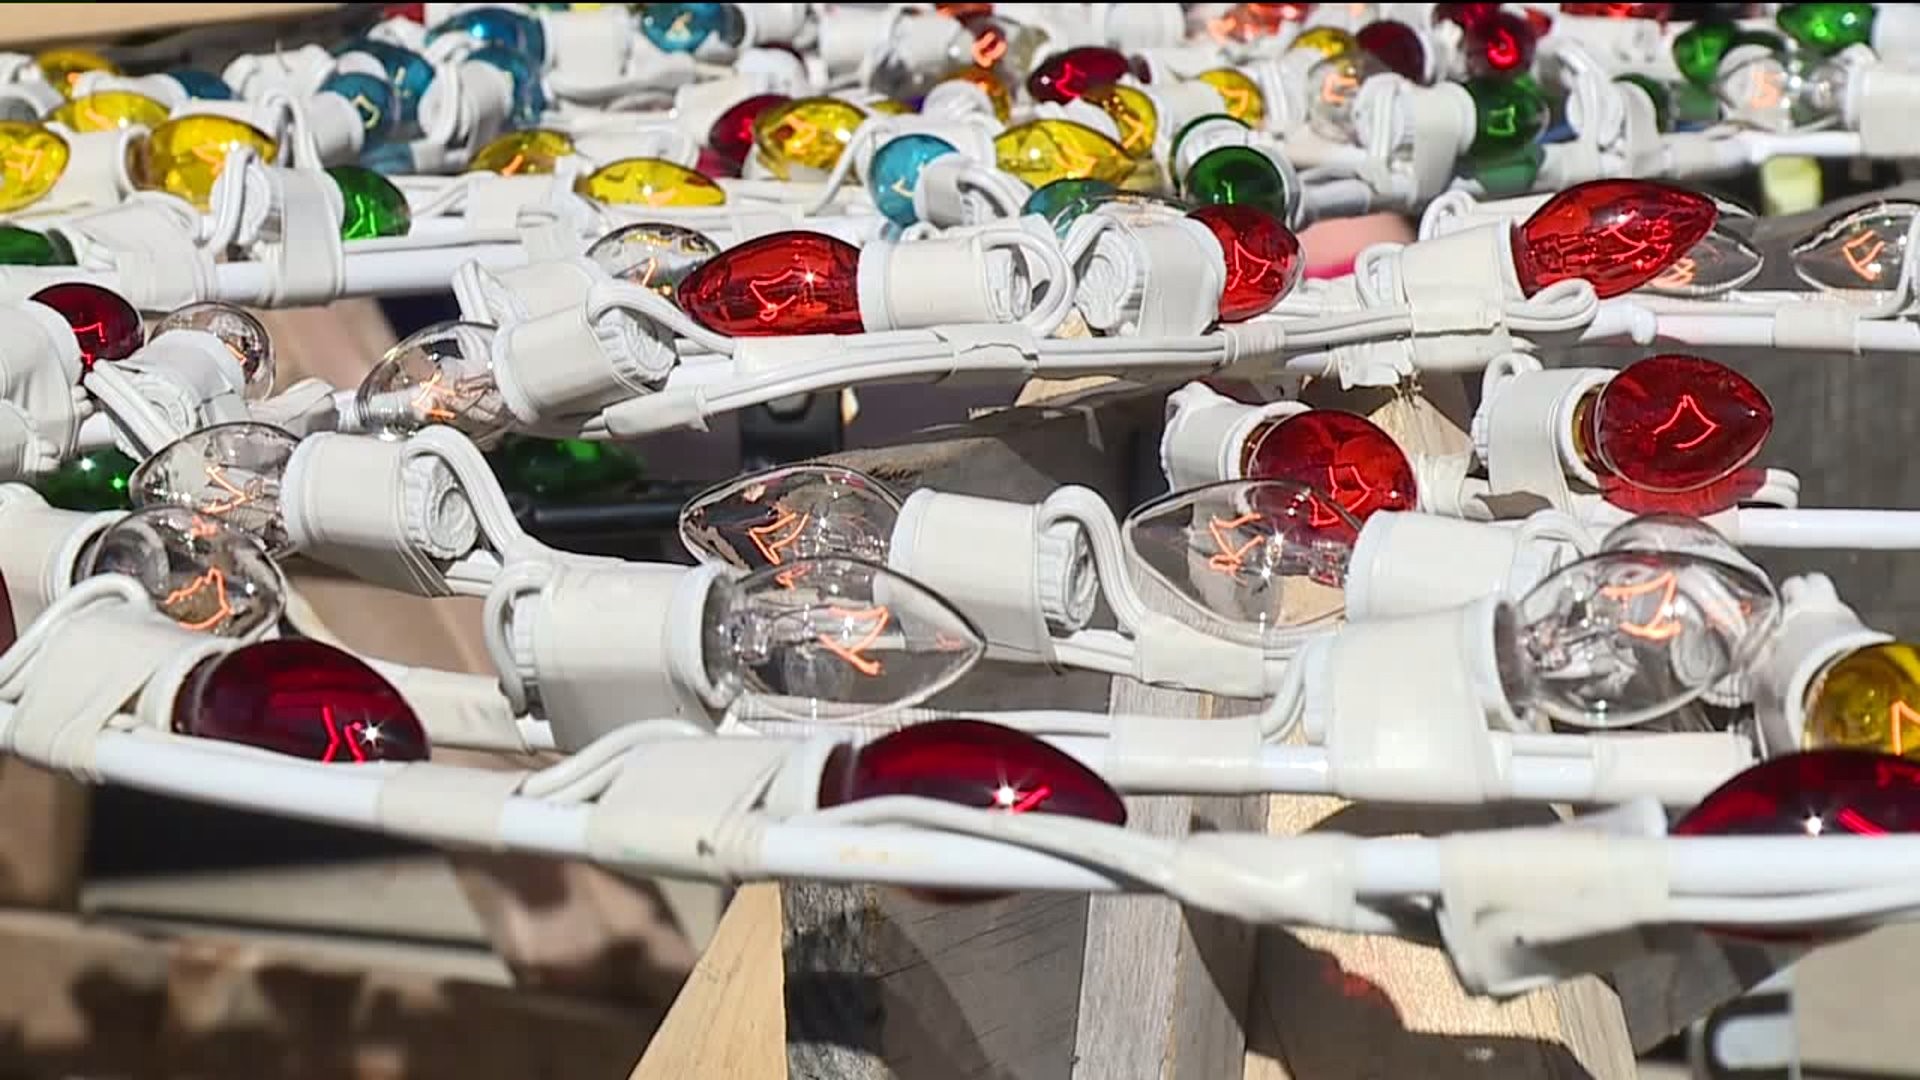 Volunteers Replace 11,000 Bulbs for Nay Aug Light Display